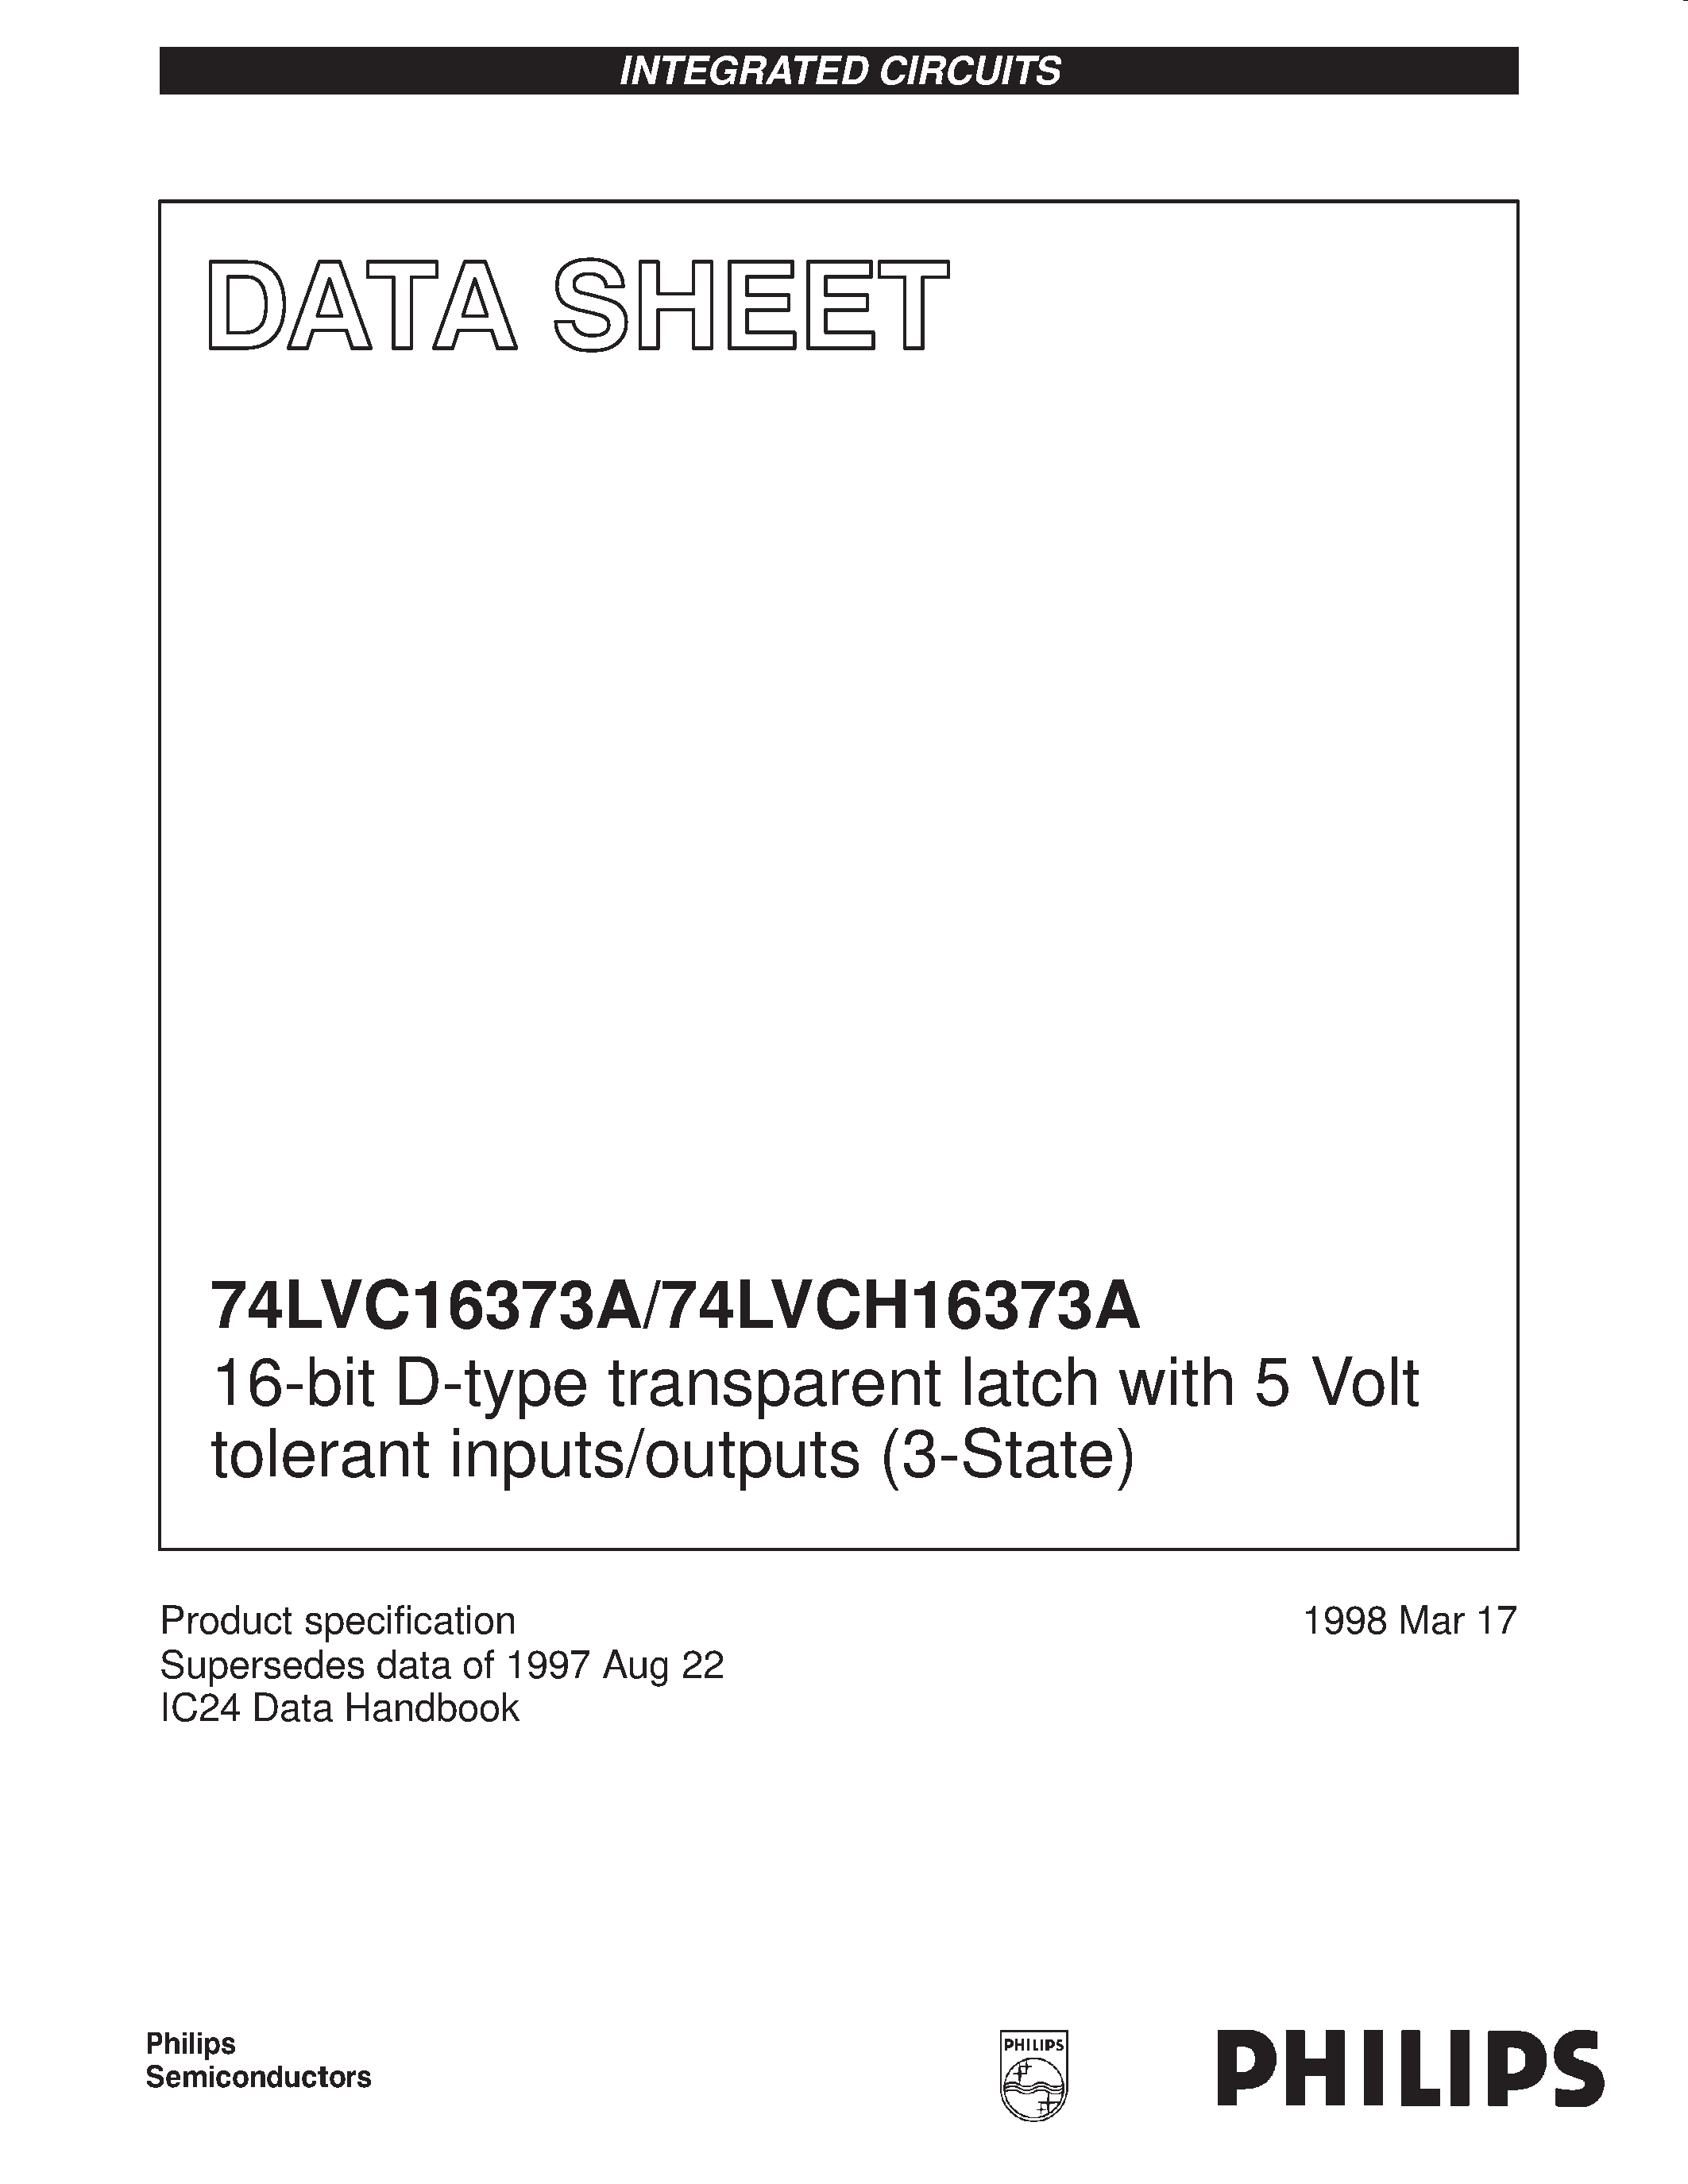 Datasheet VCH16373ADL - 16-bit D-type transparent latch with 5 Volt tolerant inputs/outputs 3-State page 1